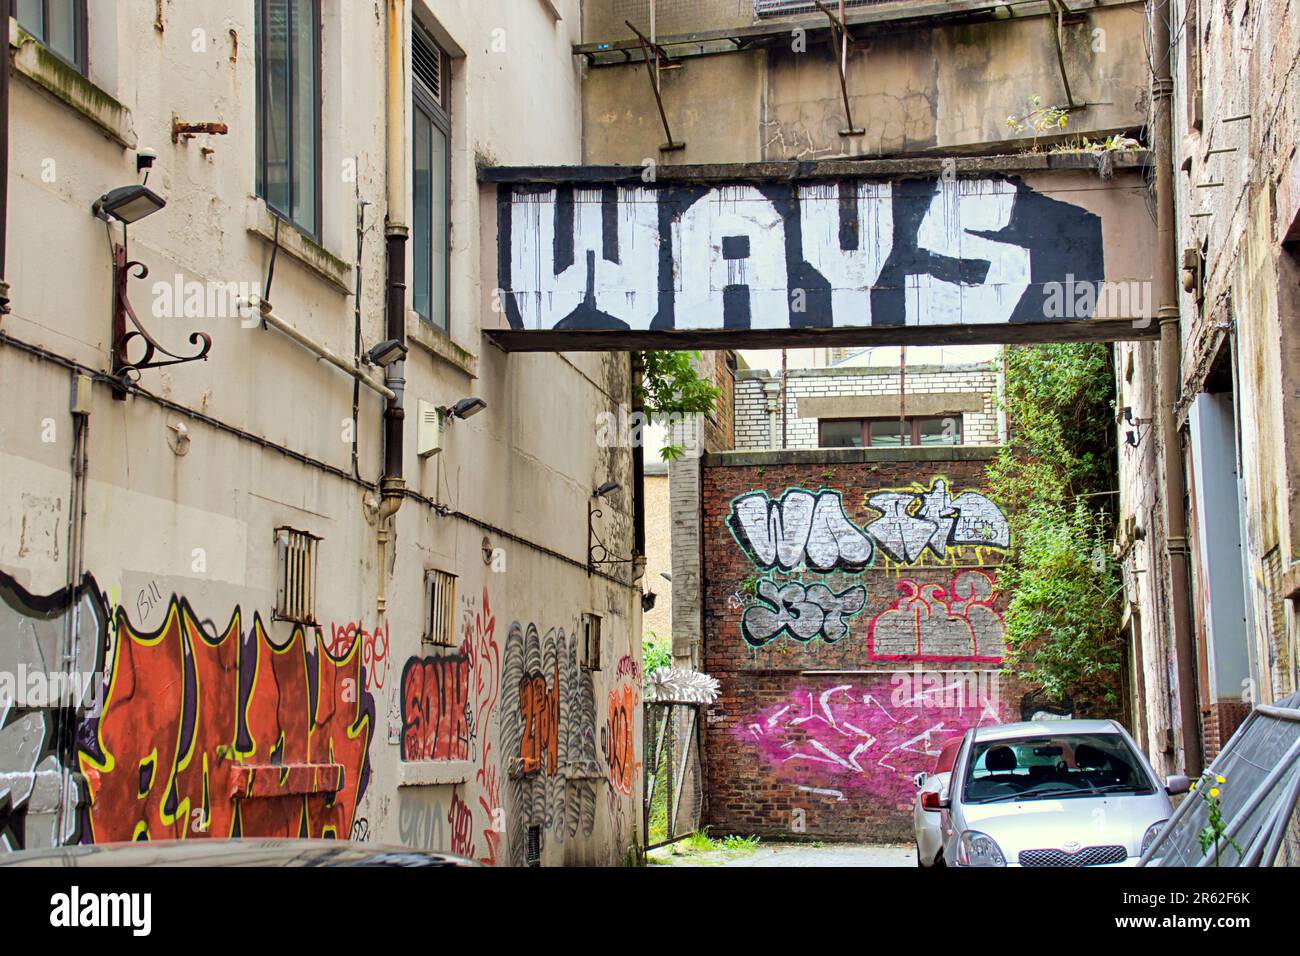 graffiti strewn alley ways Stock Photo